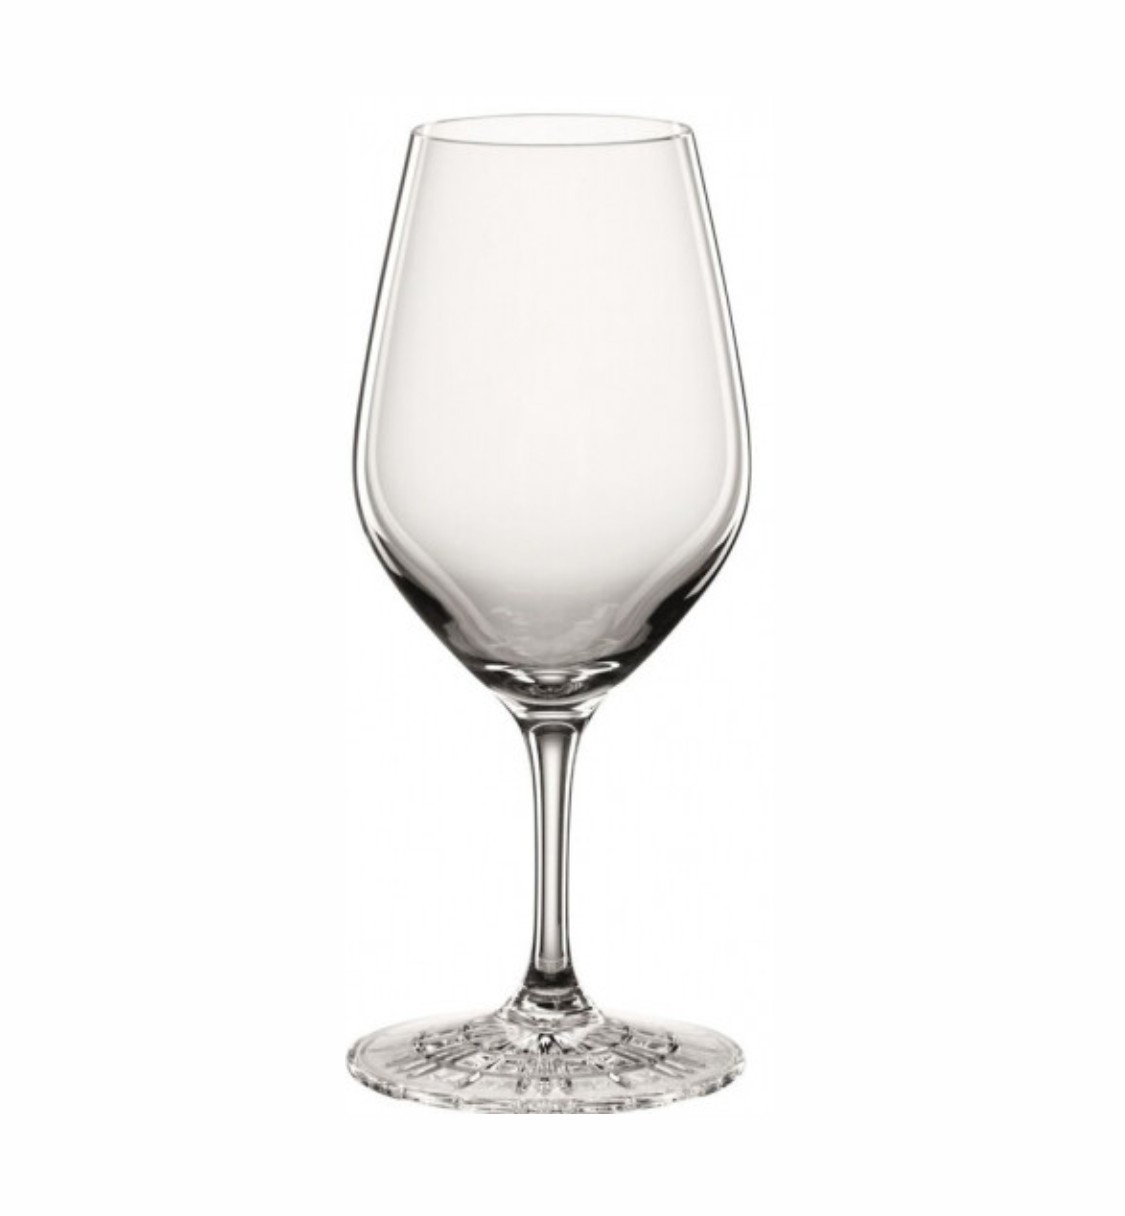 Бокал Spiegelau Perfect Tasting Glass набор из 4 шт. 210 мл